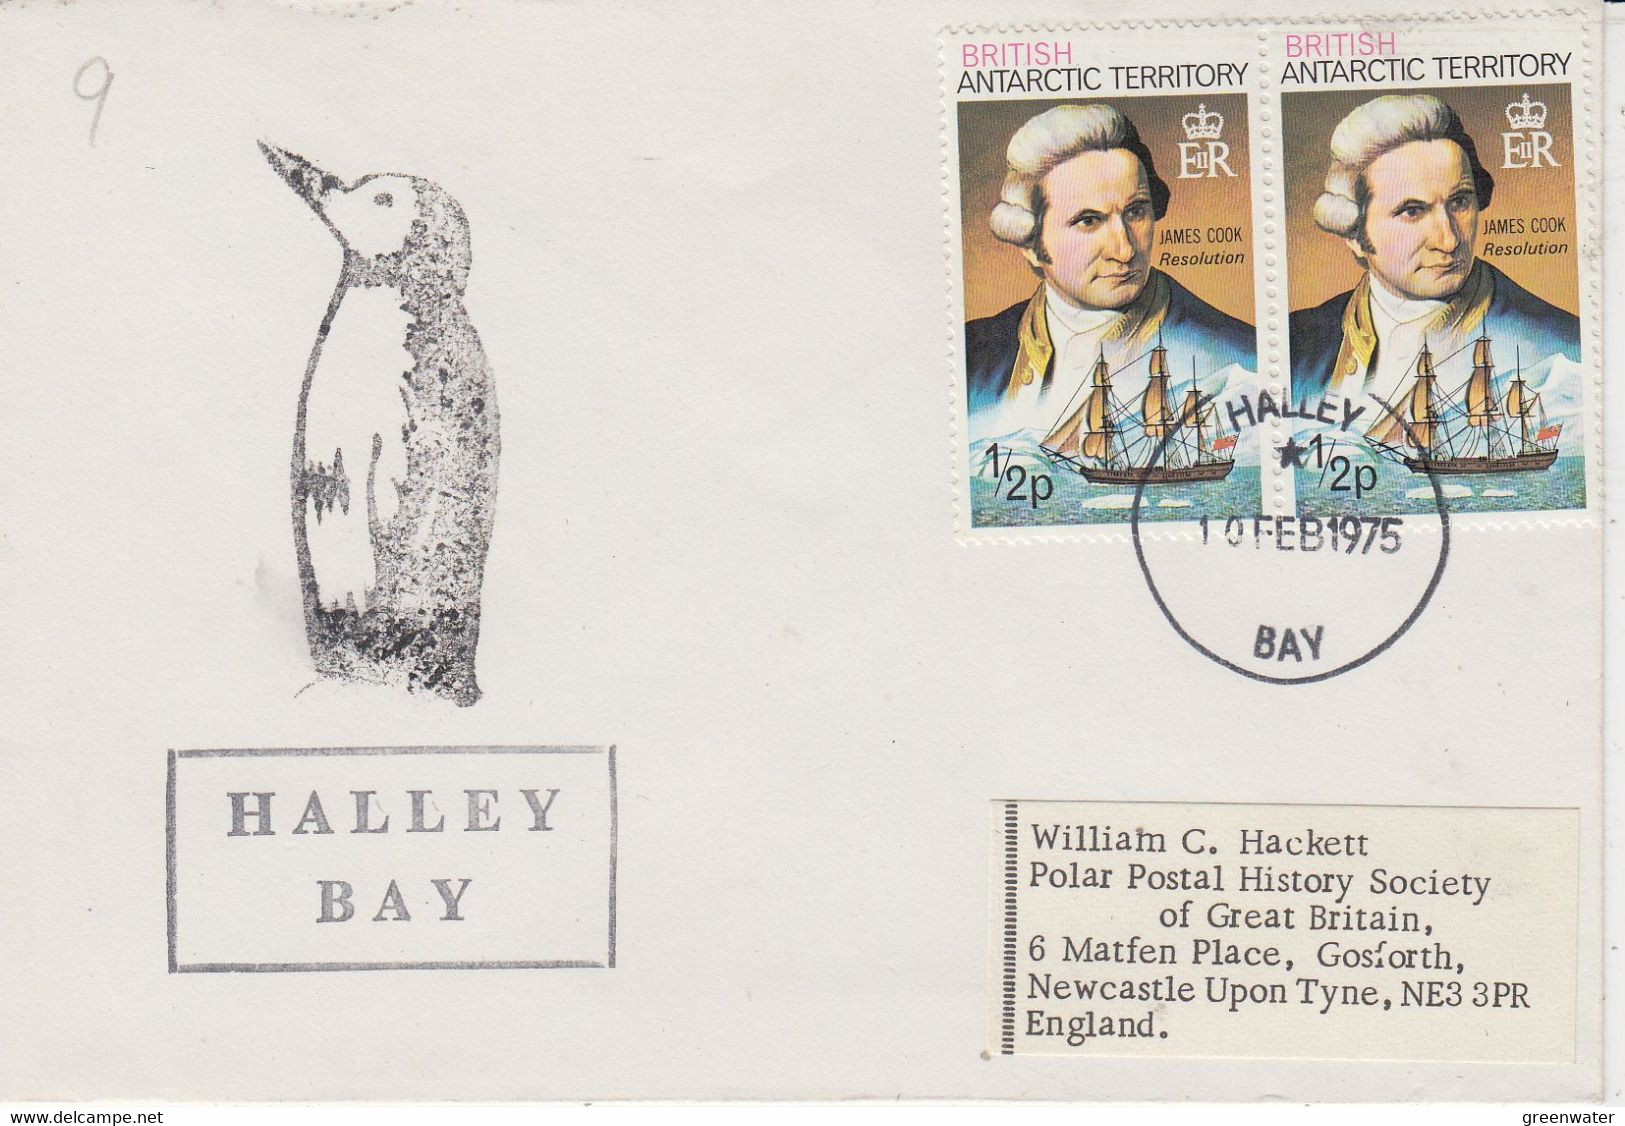 British Antarctic Territory (BAT) Halley Bay Ca Halley  Bay 10 FEB 1975 (TA180) - Storia Postale